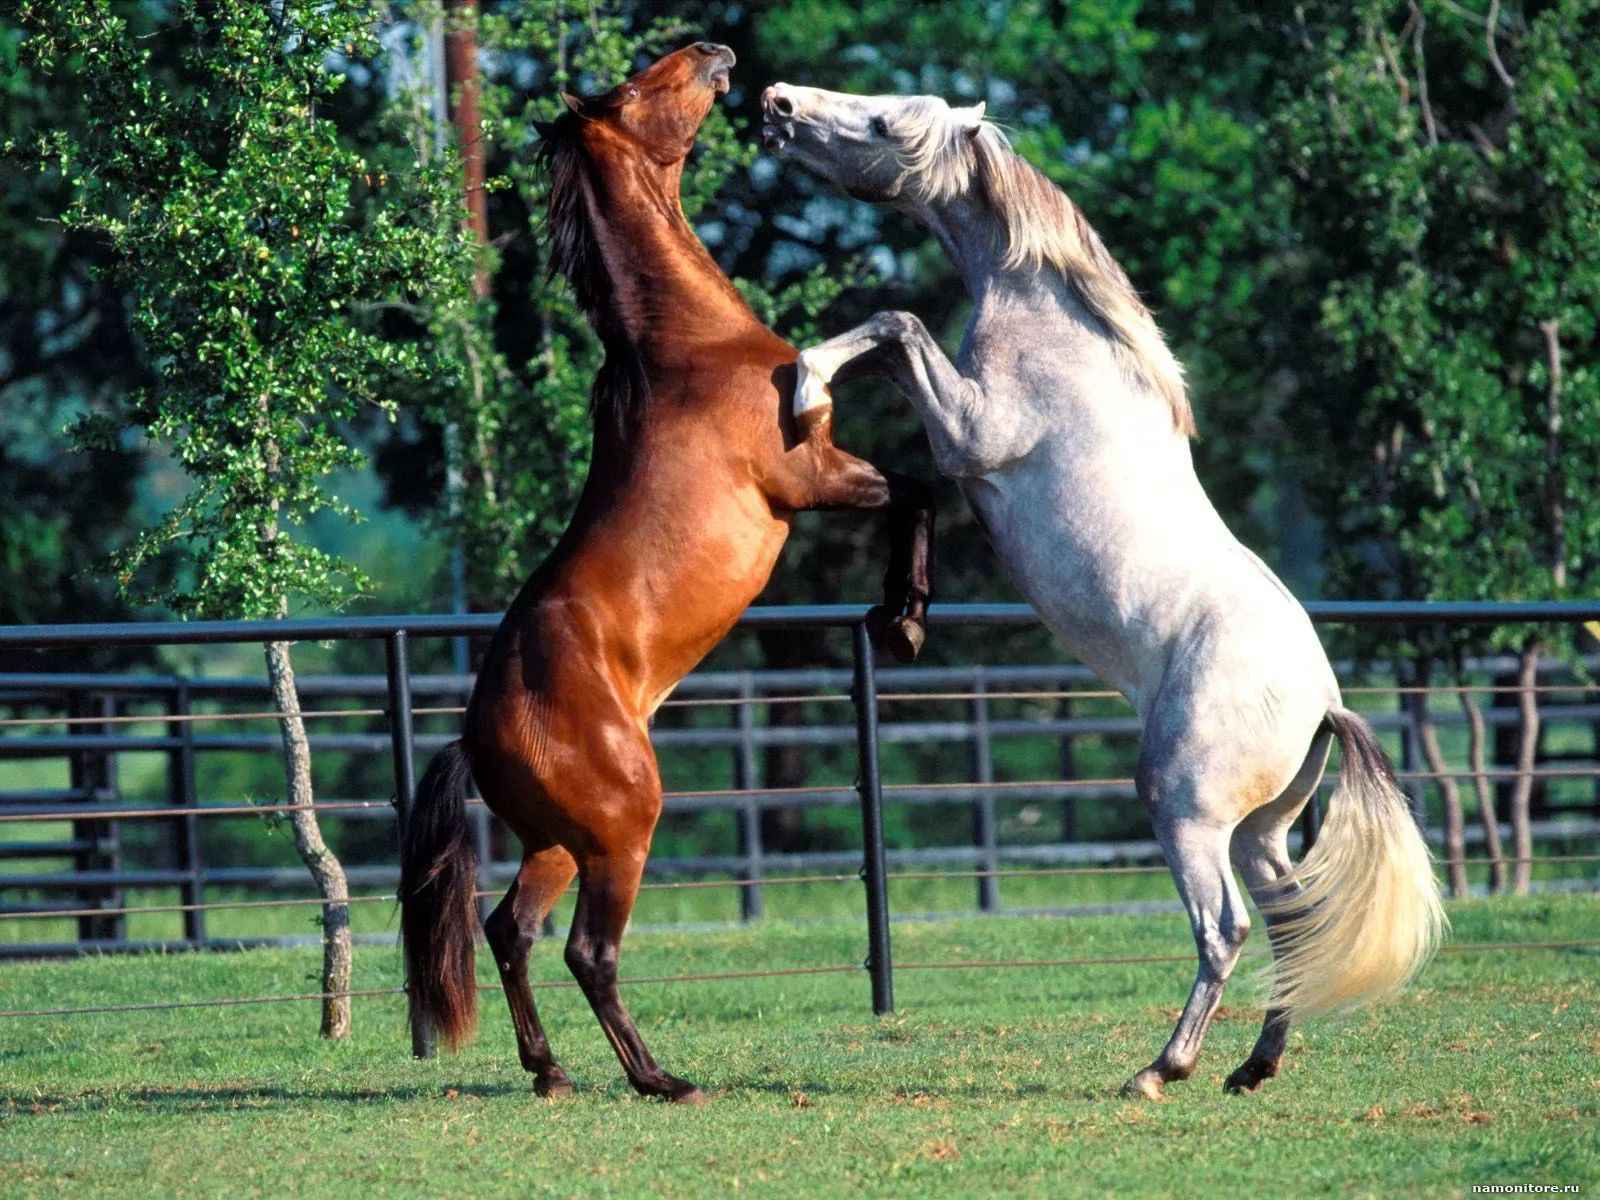 Two horses on racks, animals, enamoured, horses, on racks x